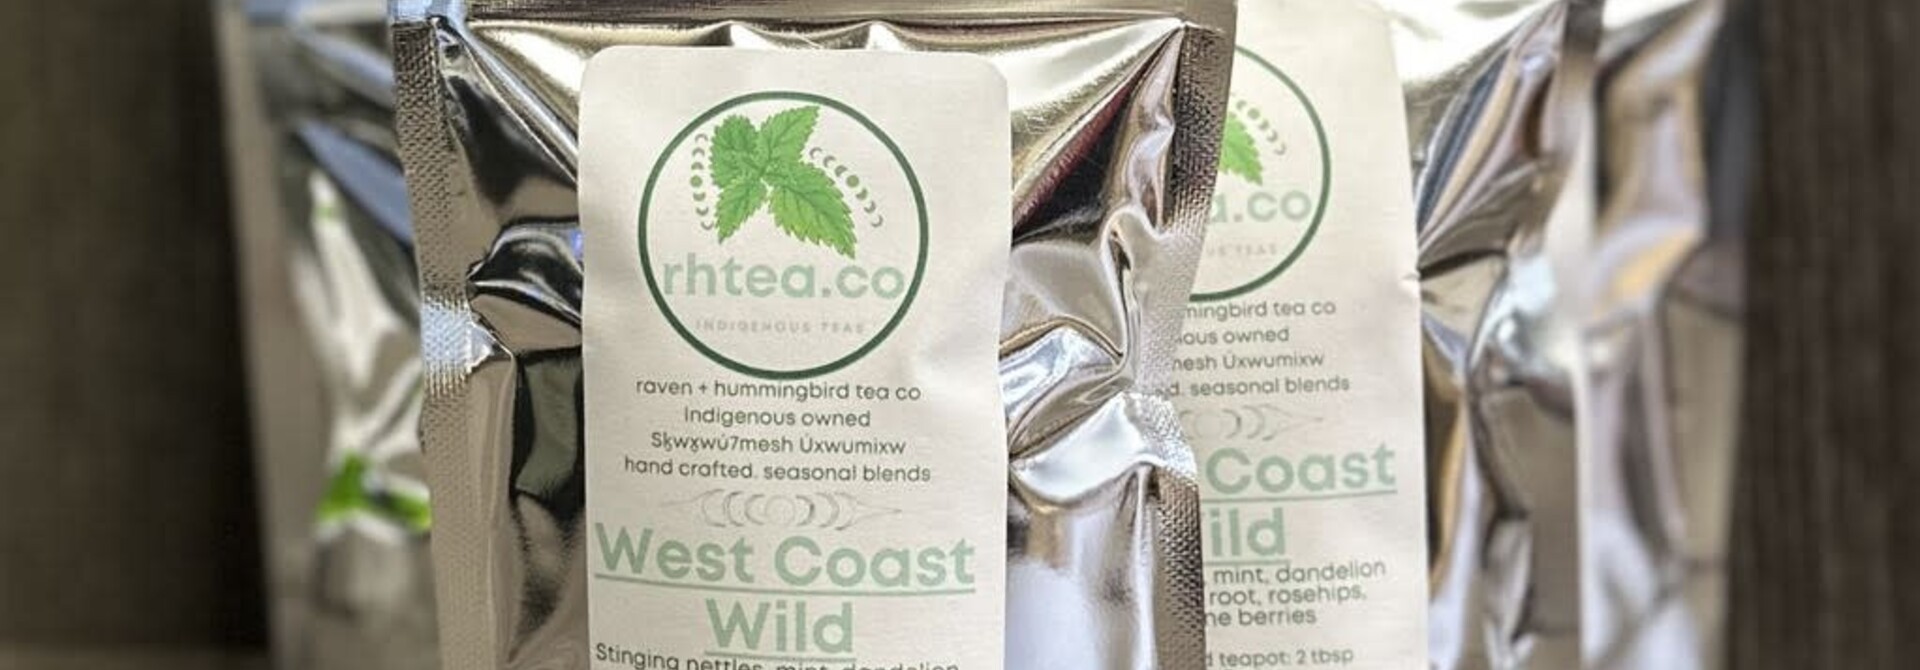 West Coast Wild Tea -by RHtea